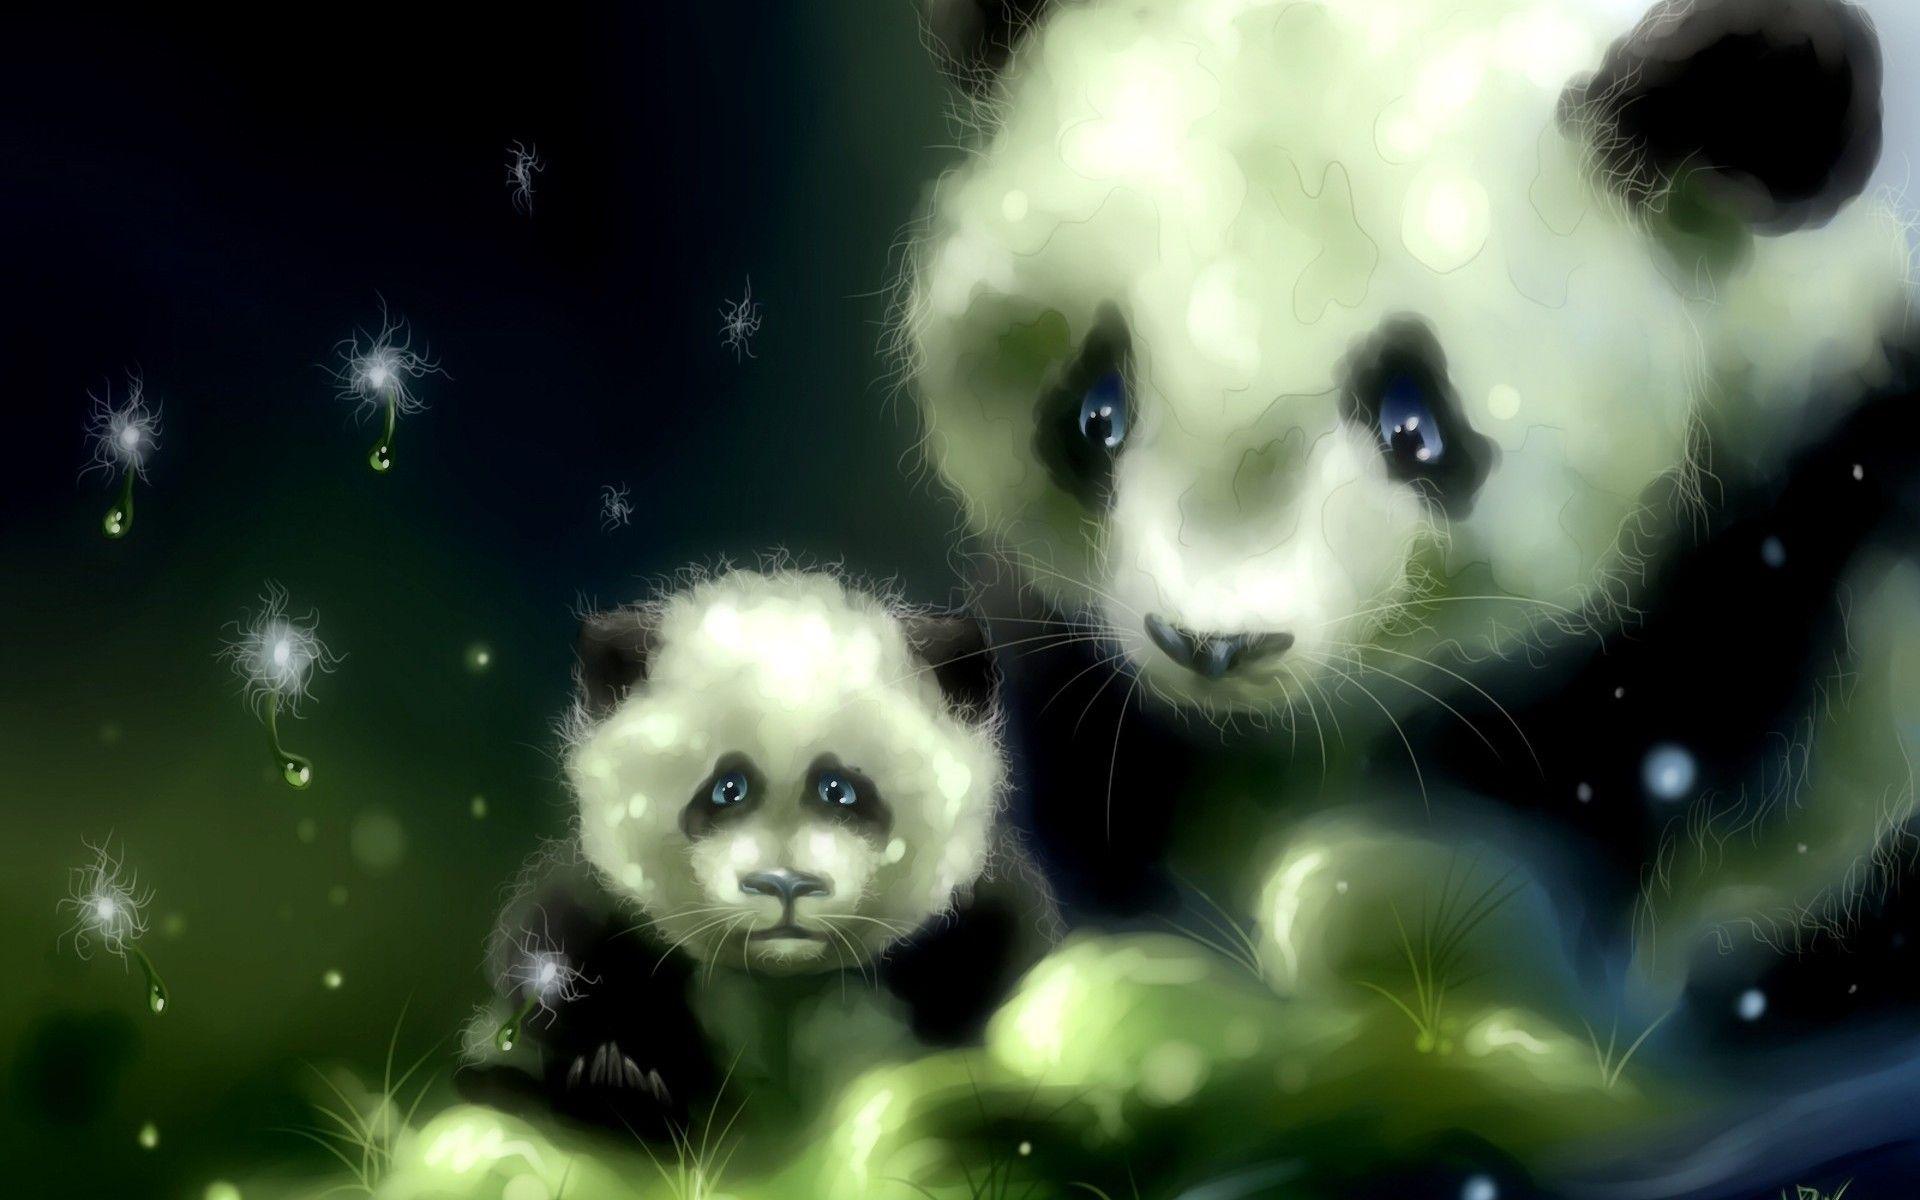 Panda Bear Wallpaper, Panda Bear Wallpaper. Download Free